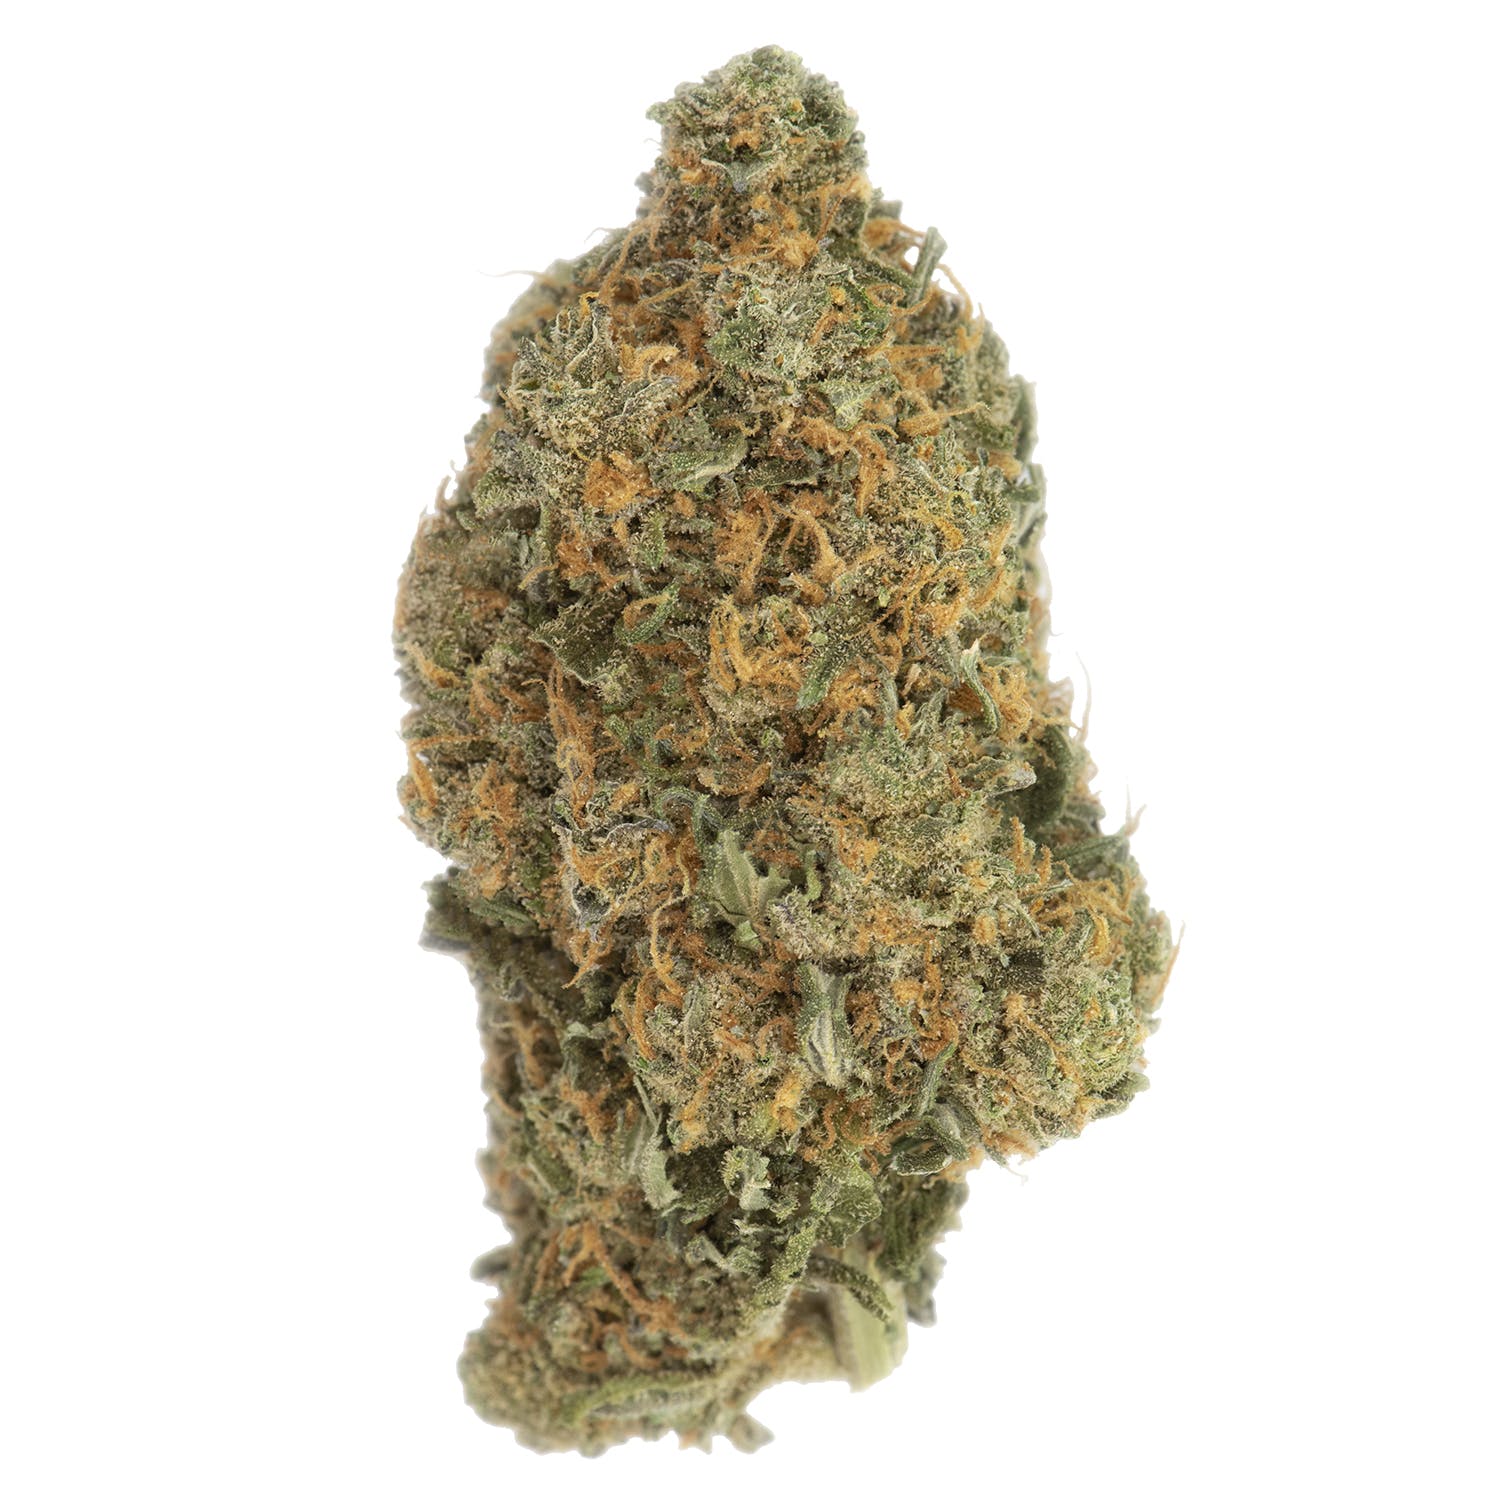 marijuana-dispensaries-mmj-canada-queenston-rd-in-hamilton-stardawg-by-rarest-cannabis